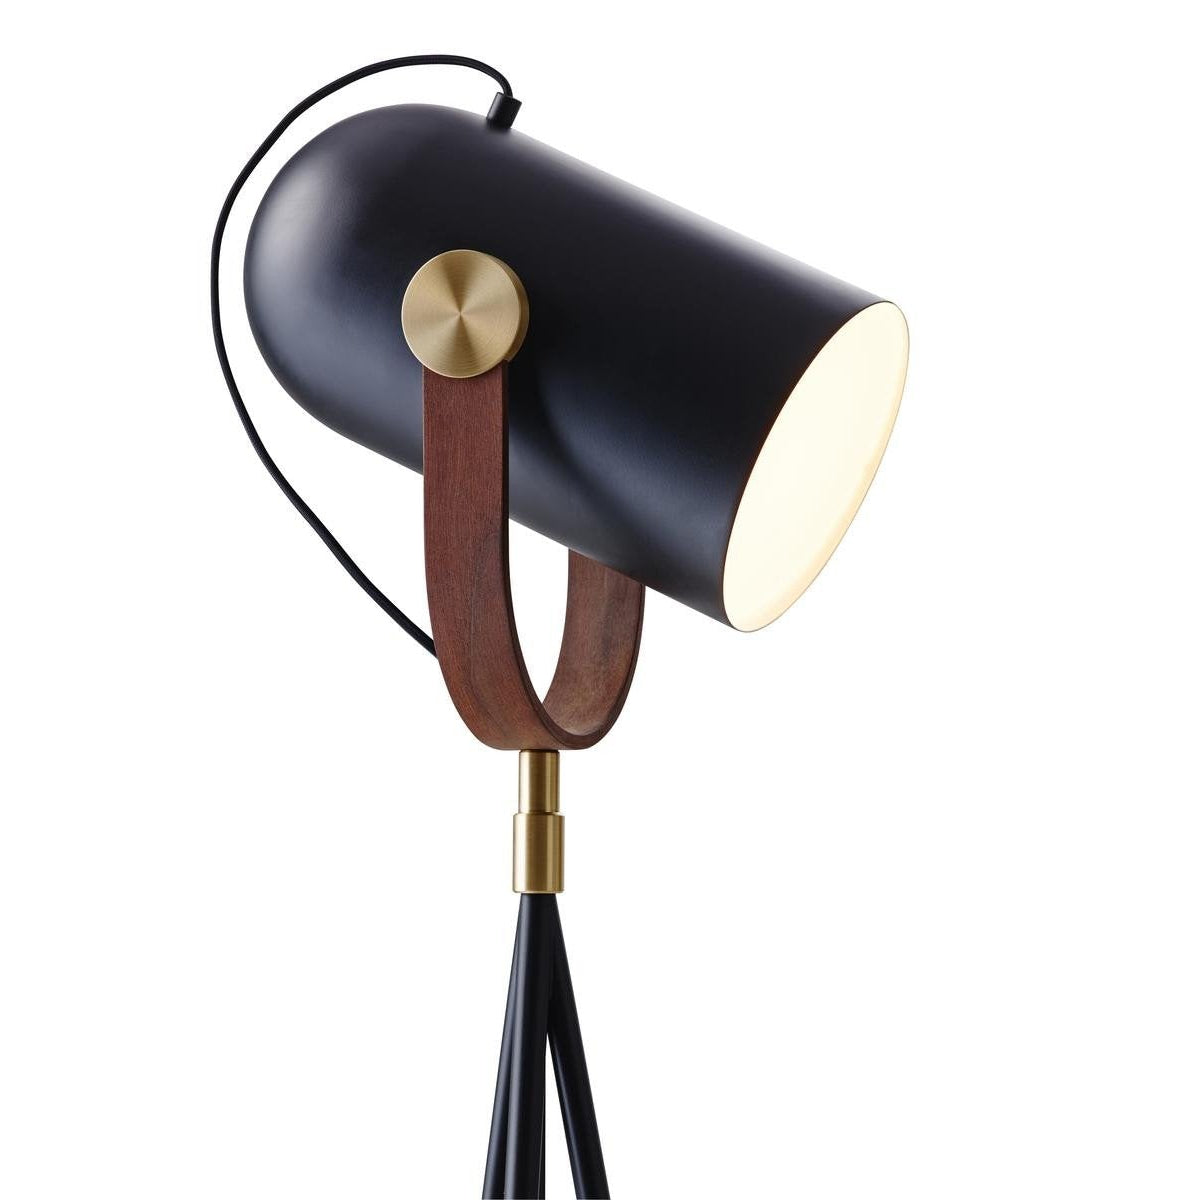 Le Klint Carronade gulvlampe svart, høy